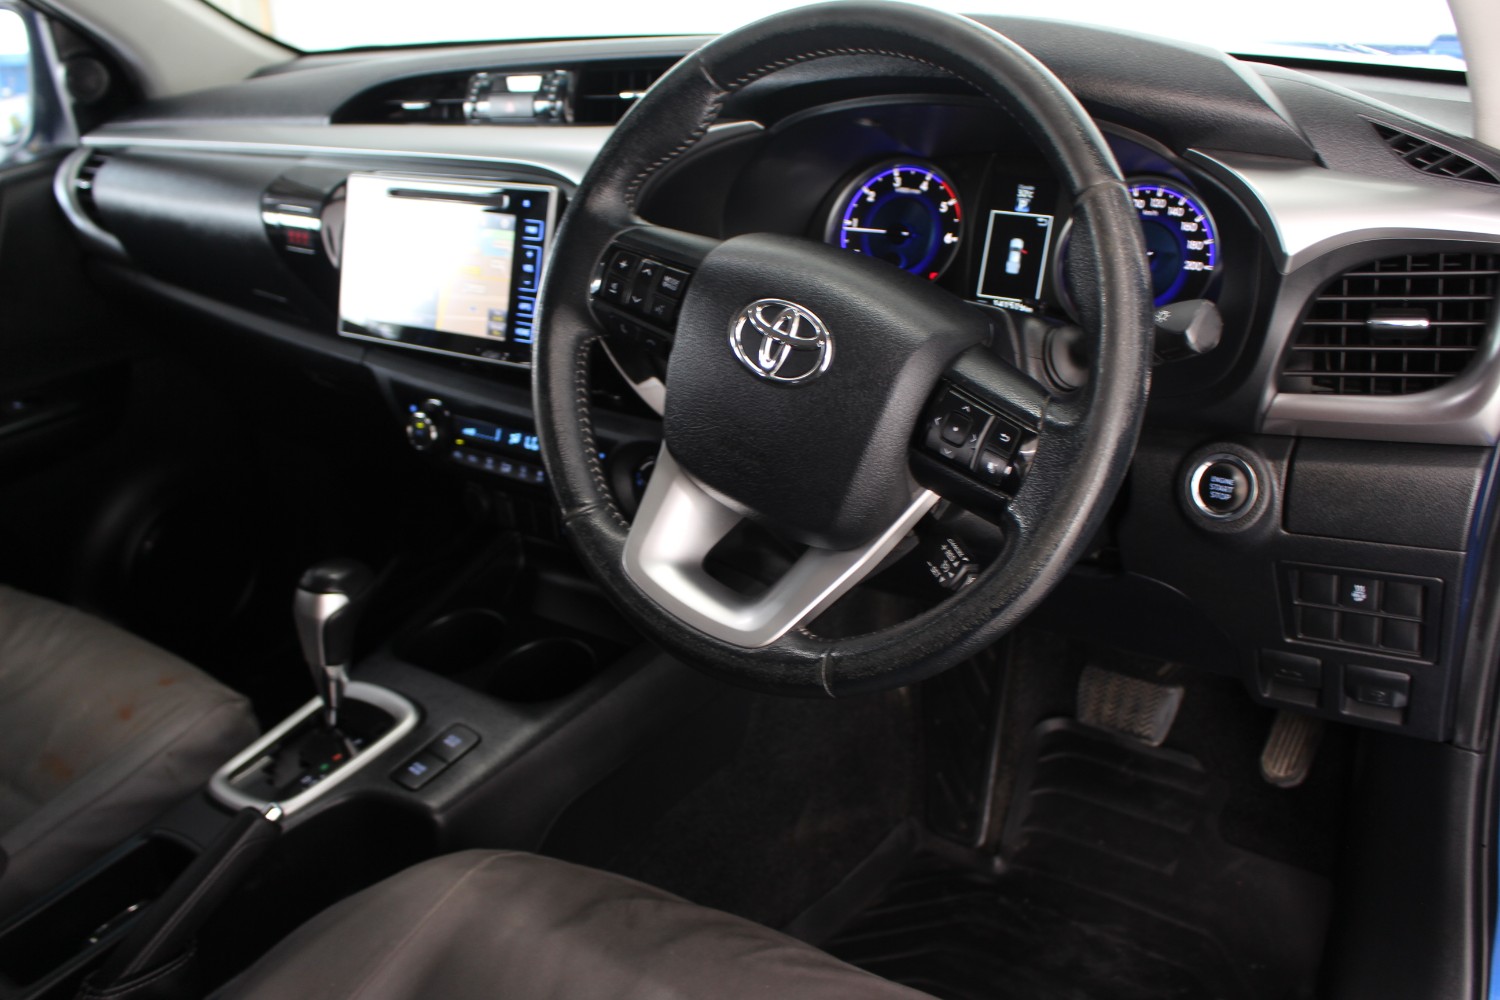 2015 MY16 Toyota HiLux SR5 4x4 Double-Cab Pick-Up Dual Cab Image 7